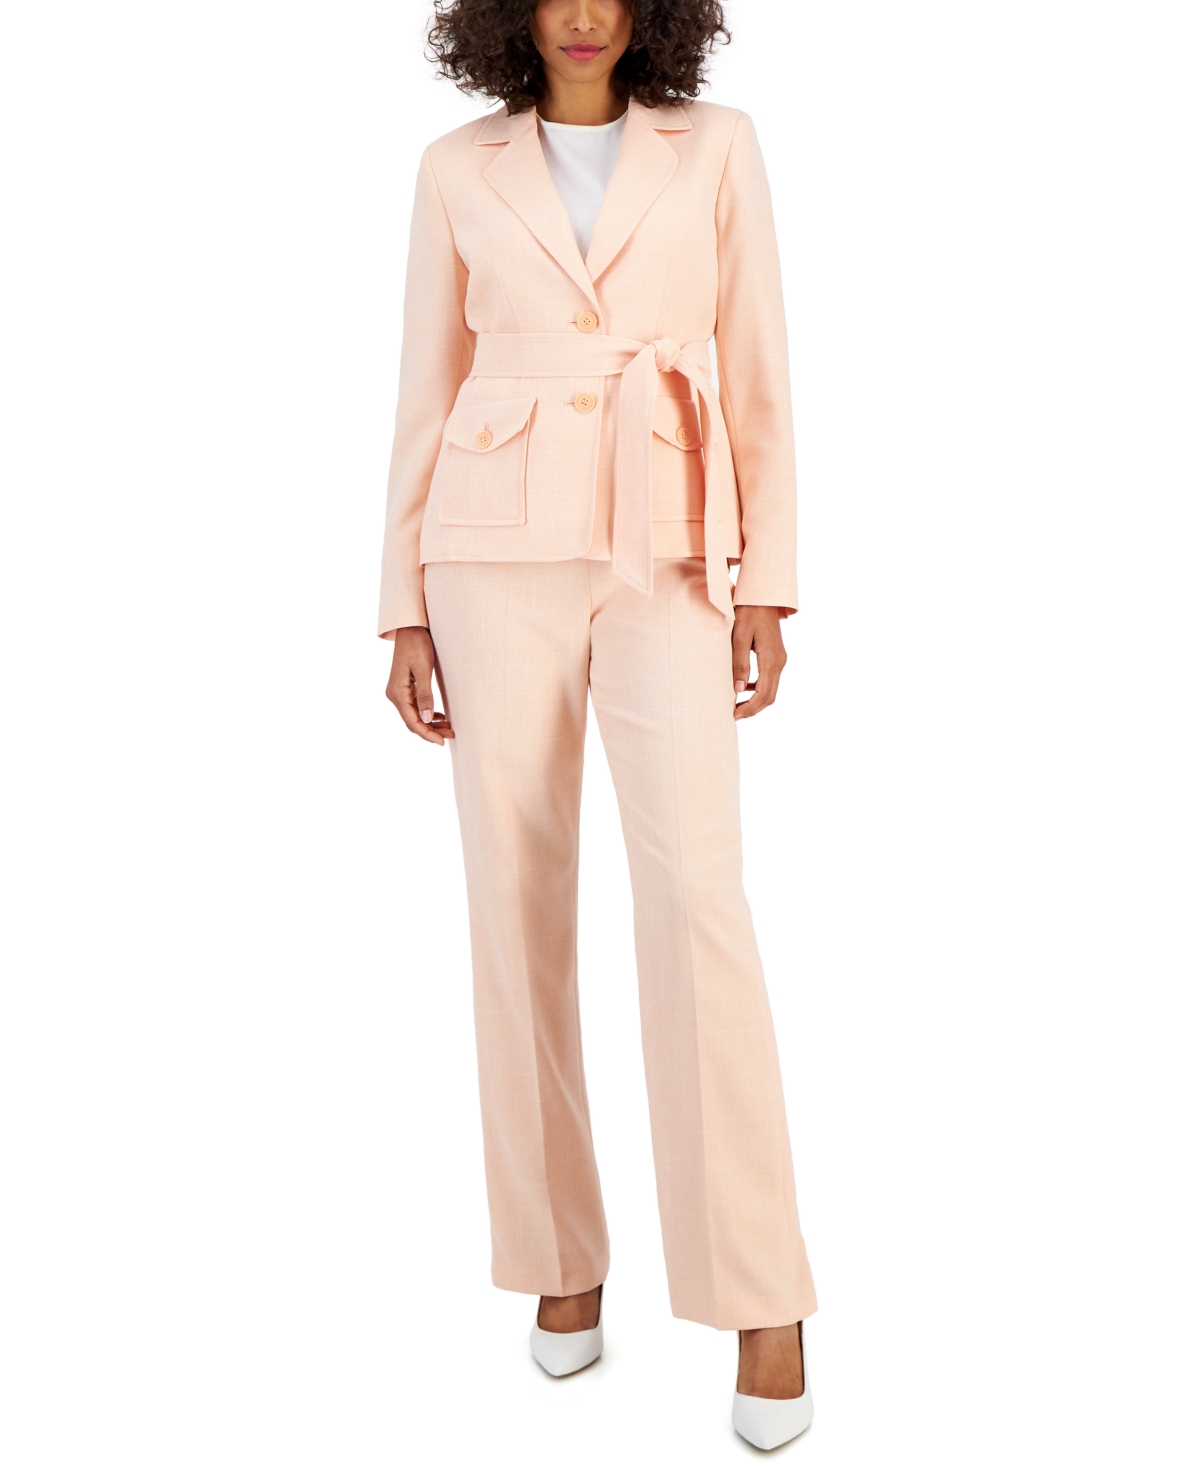 Le Suit Women's Belted Safari Jacket Pantsuit, Regular & Petite Sizes In Apricot,white